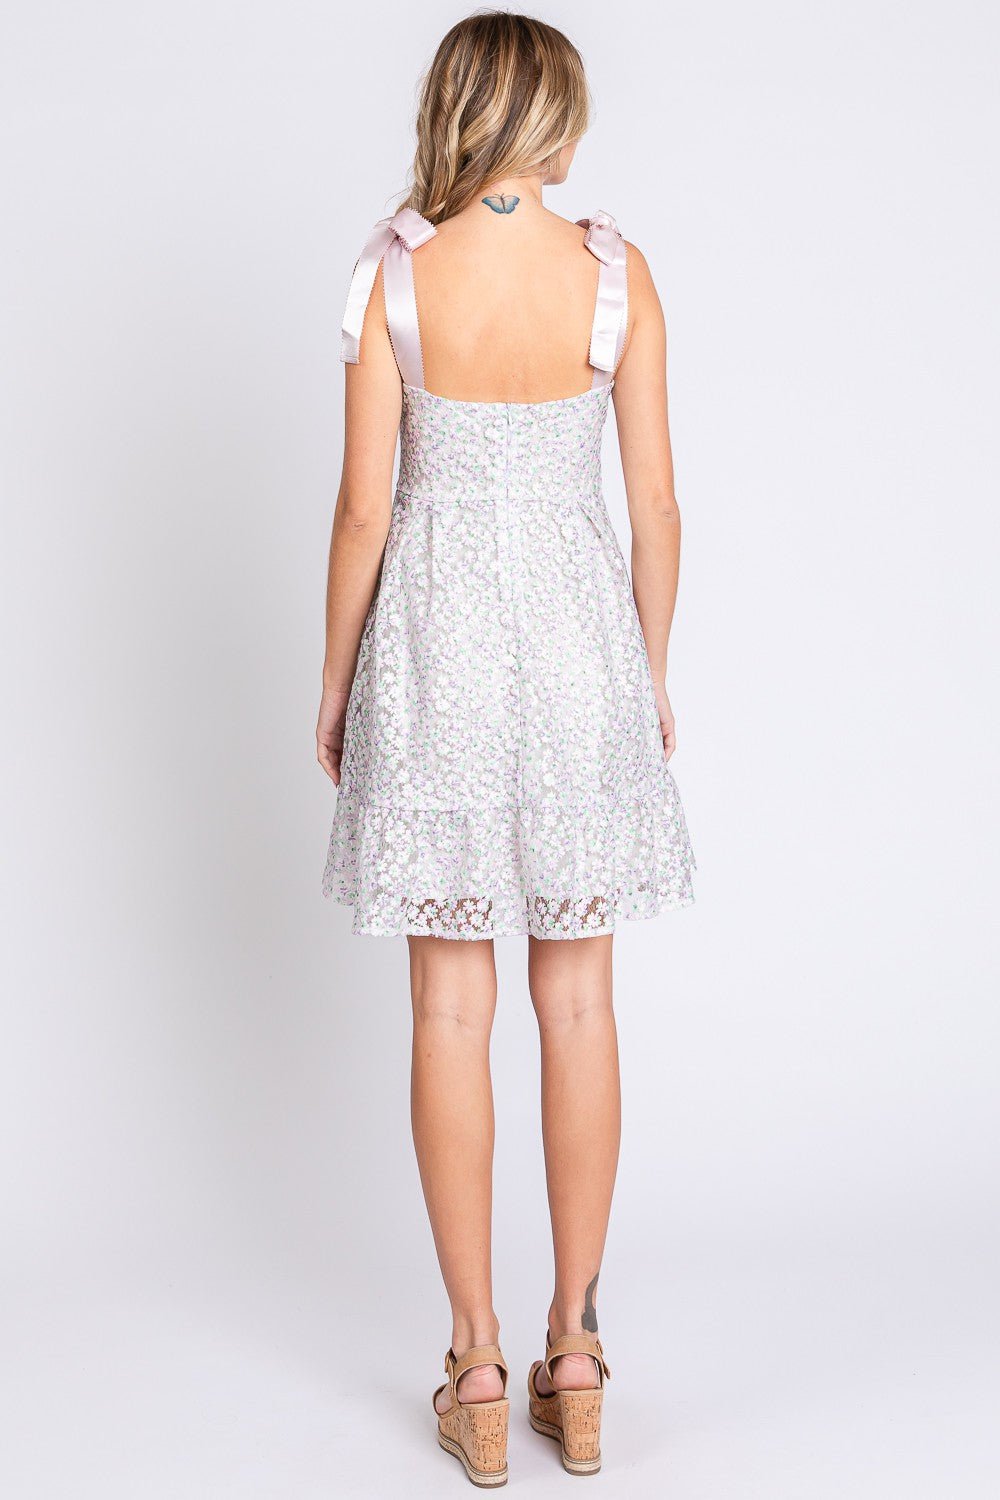 Tulle Floral Sleeveless Mini Dress in Lavender/MintMini DressGeeGee